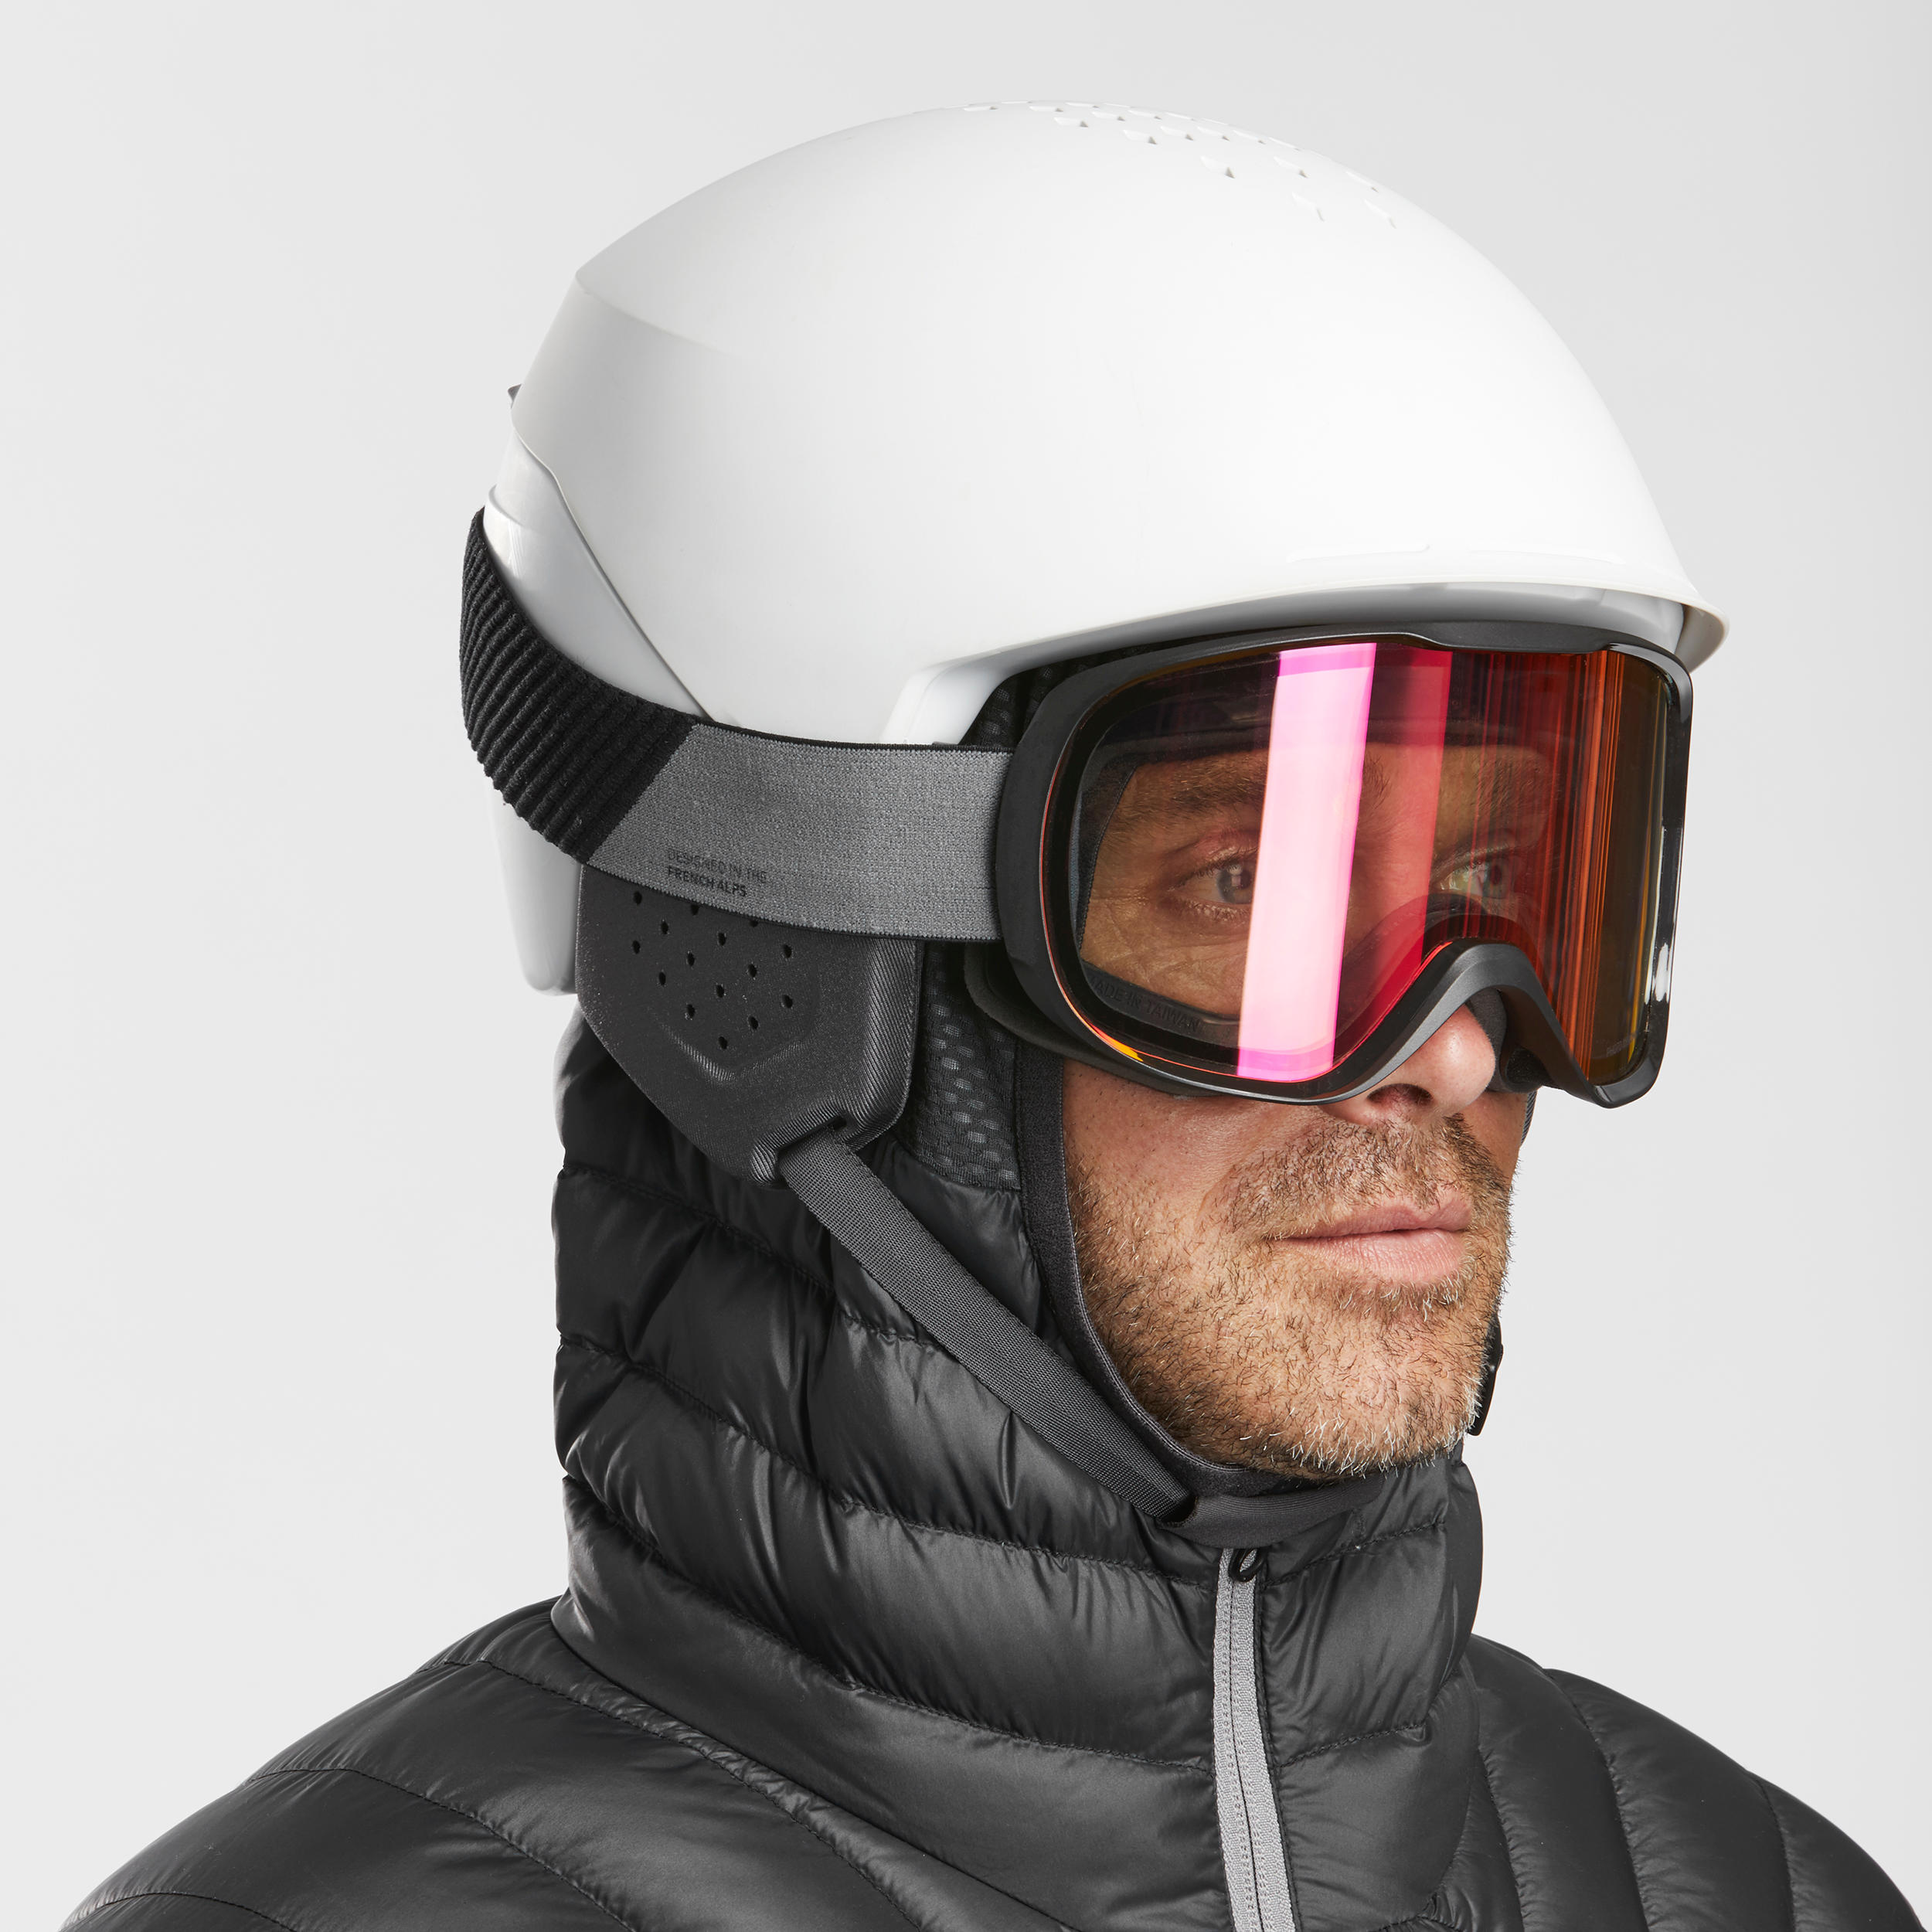 Men's Down Jacket - Ski FR 900 Grey - WEDZE